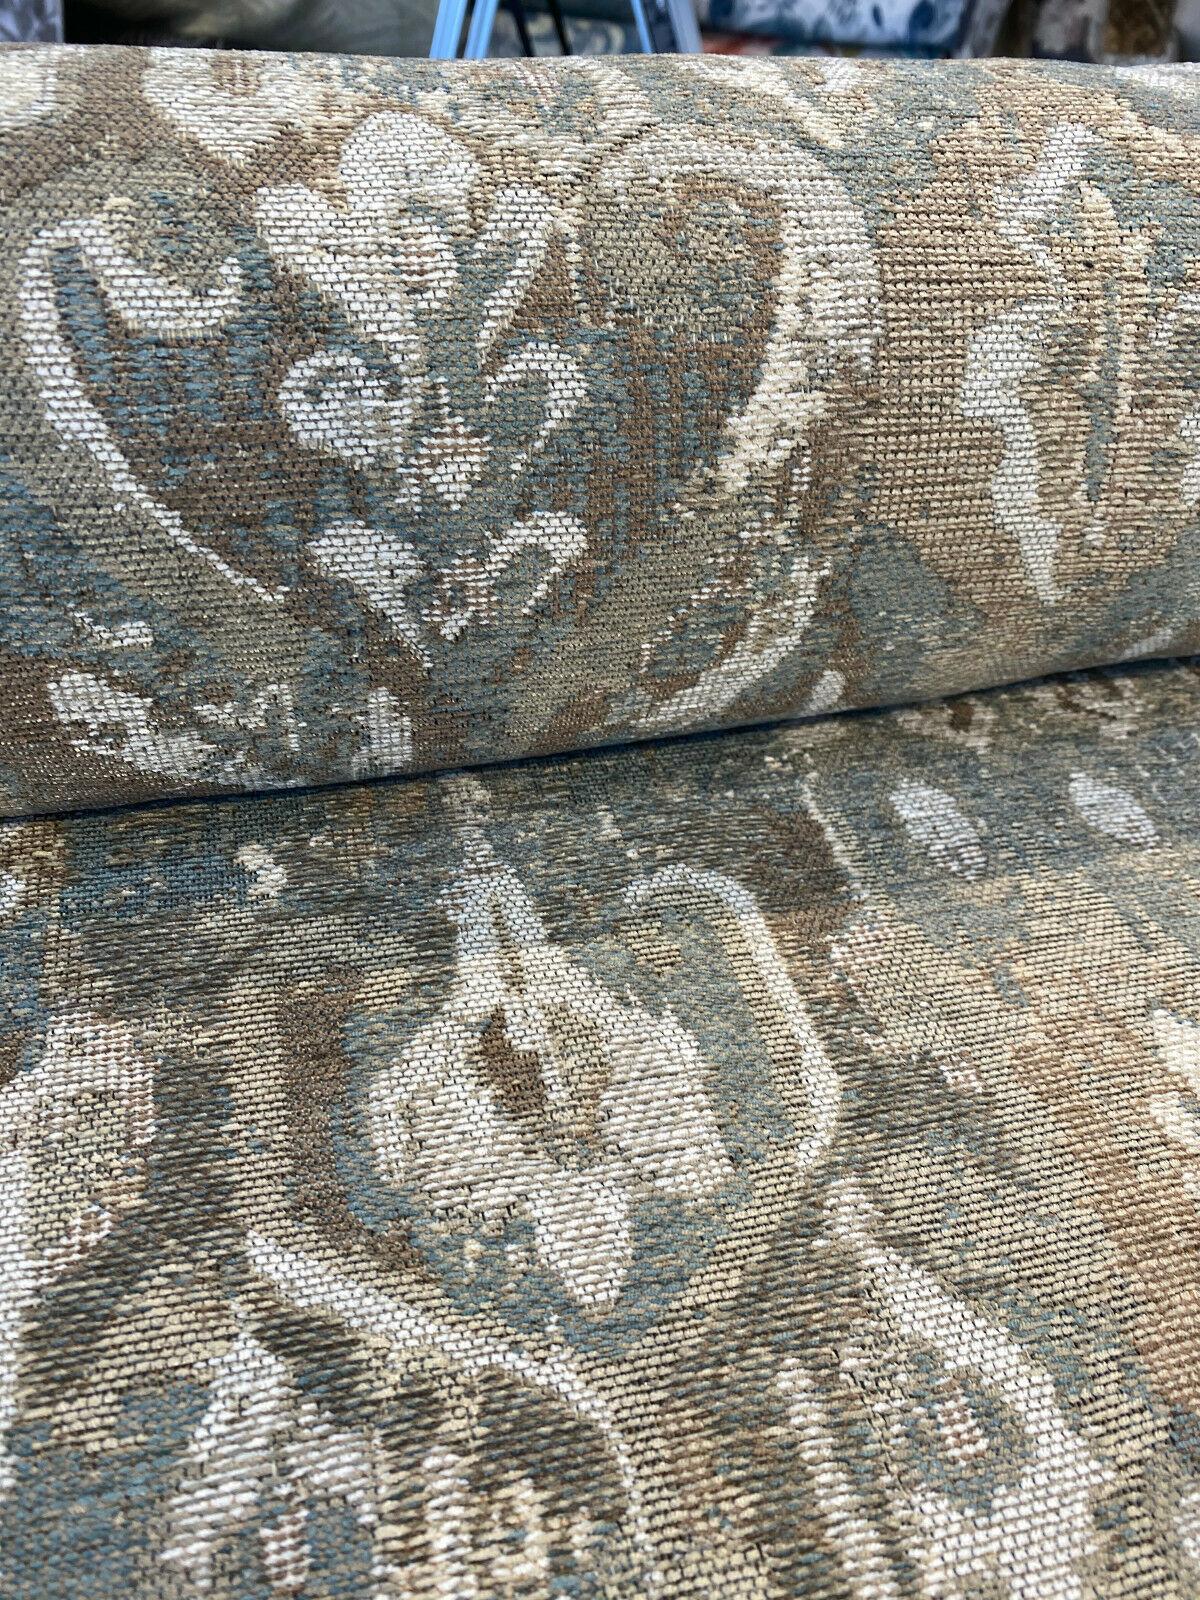 Kaisley Seamist Tribal Green Upholstery Fabric by the yard sofa chair